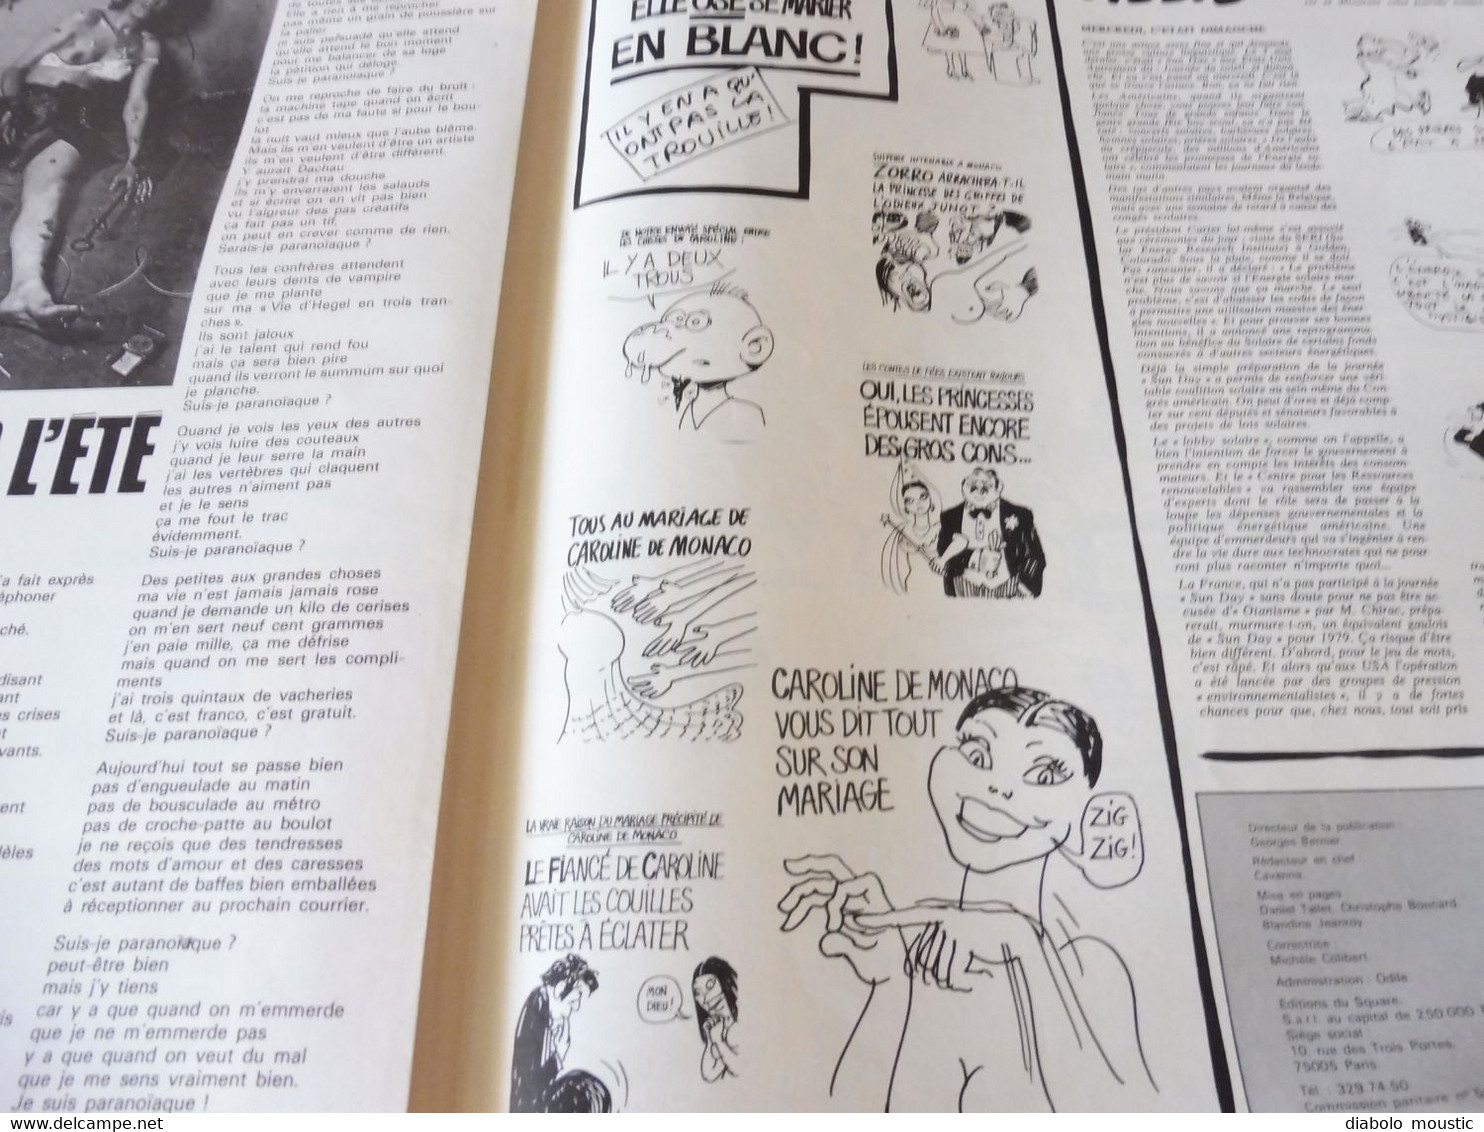 1978 MONACO : La pègre en liesse .................Etc  (Charlie Hebdo)